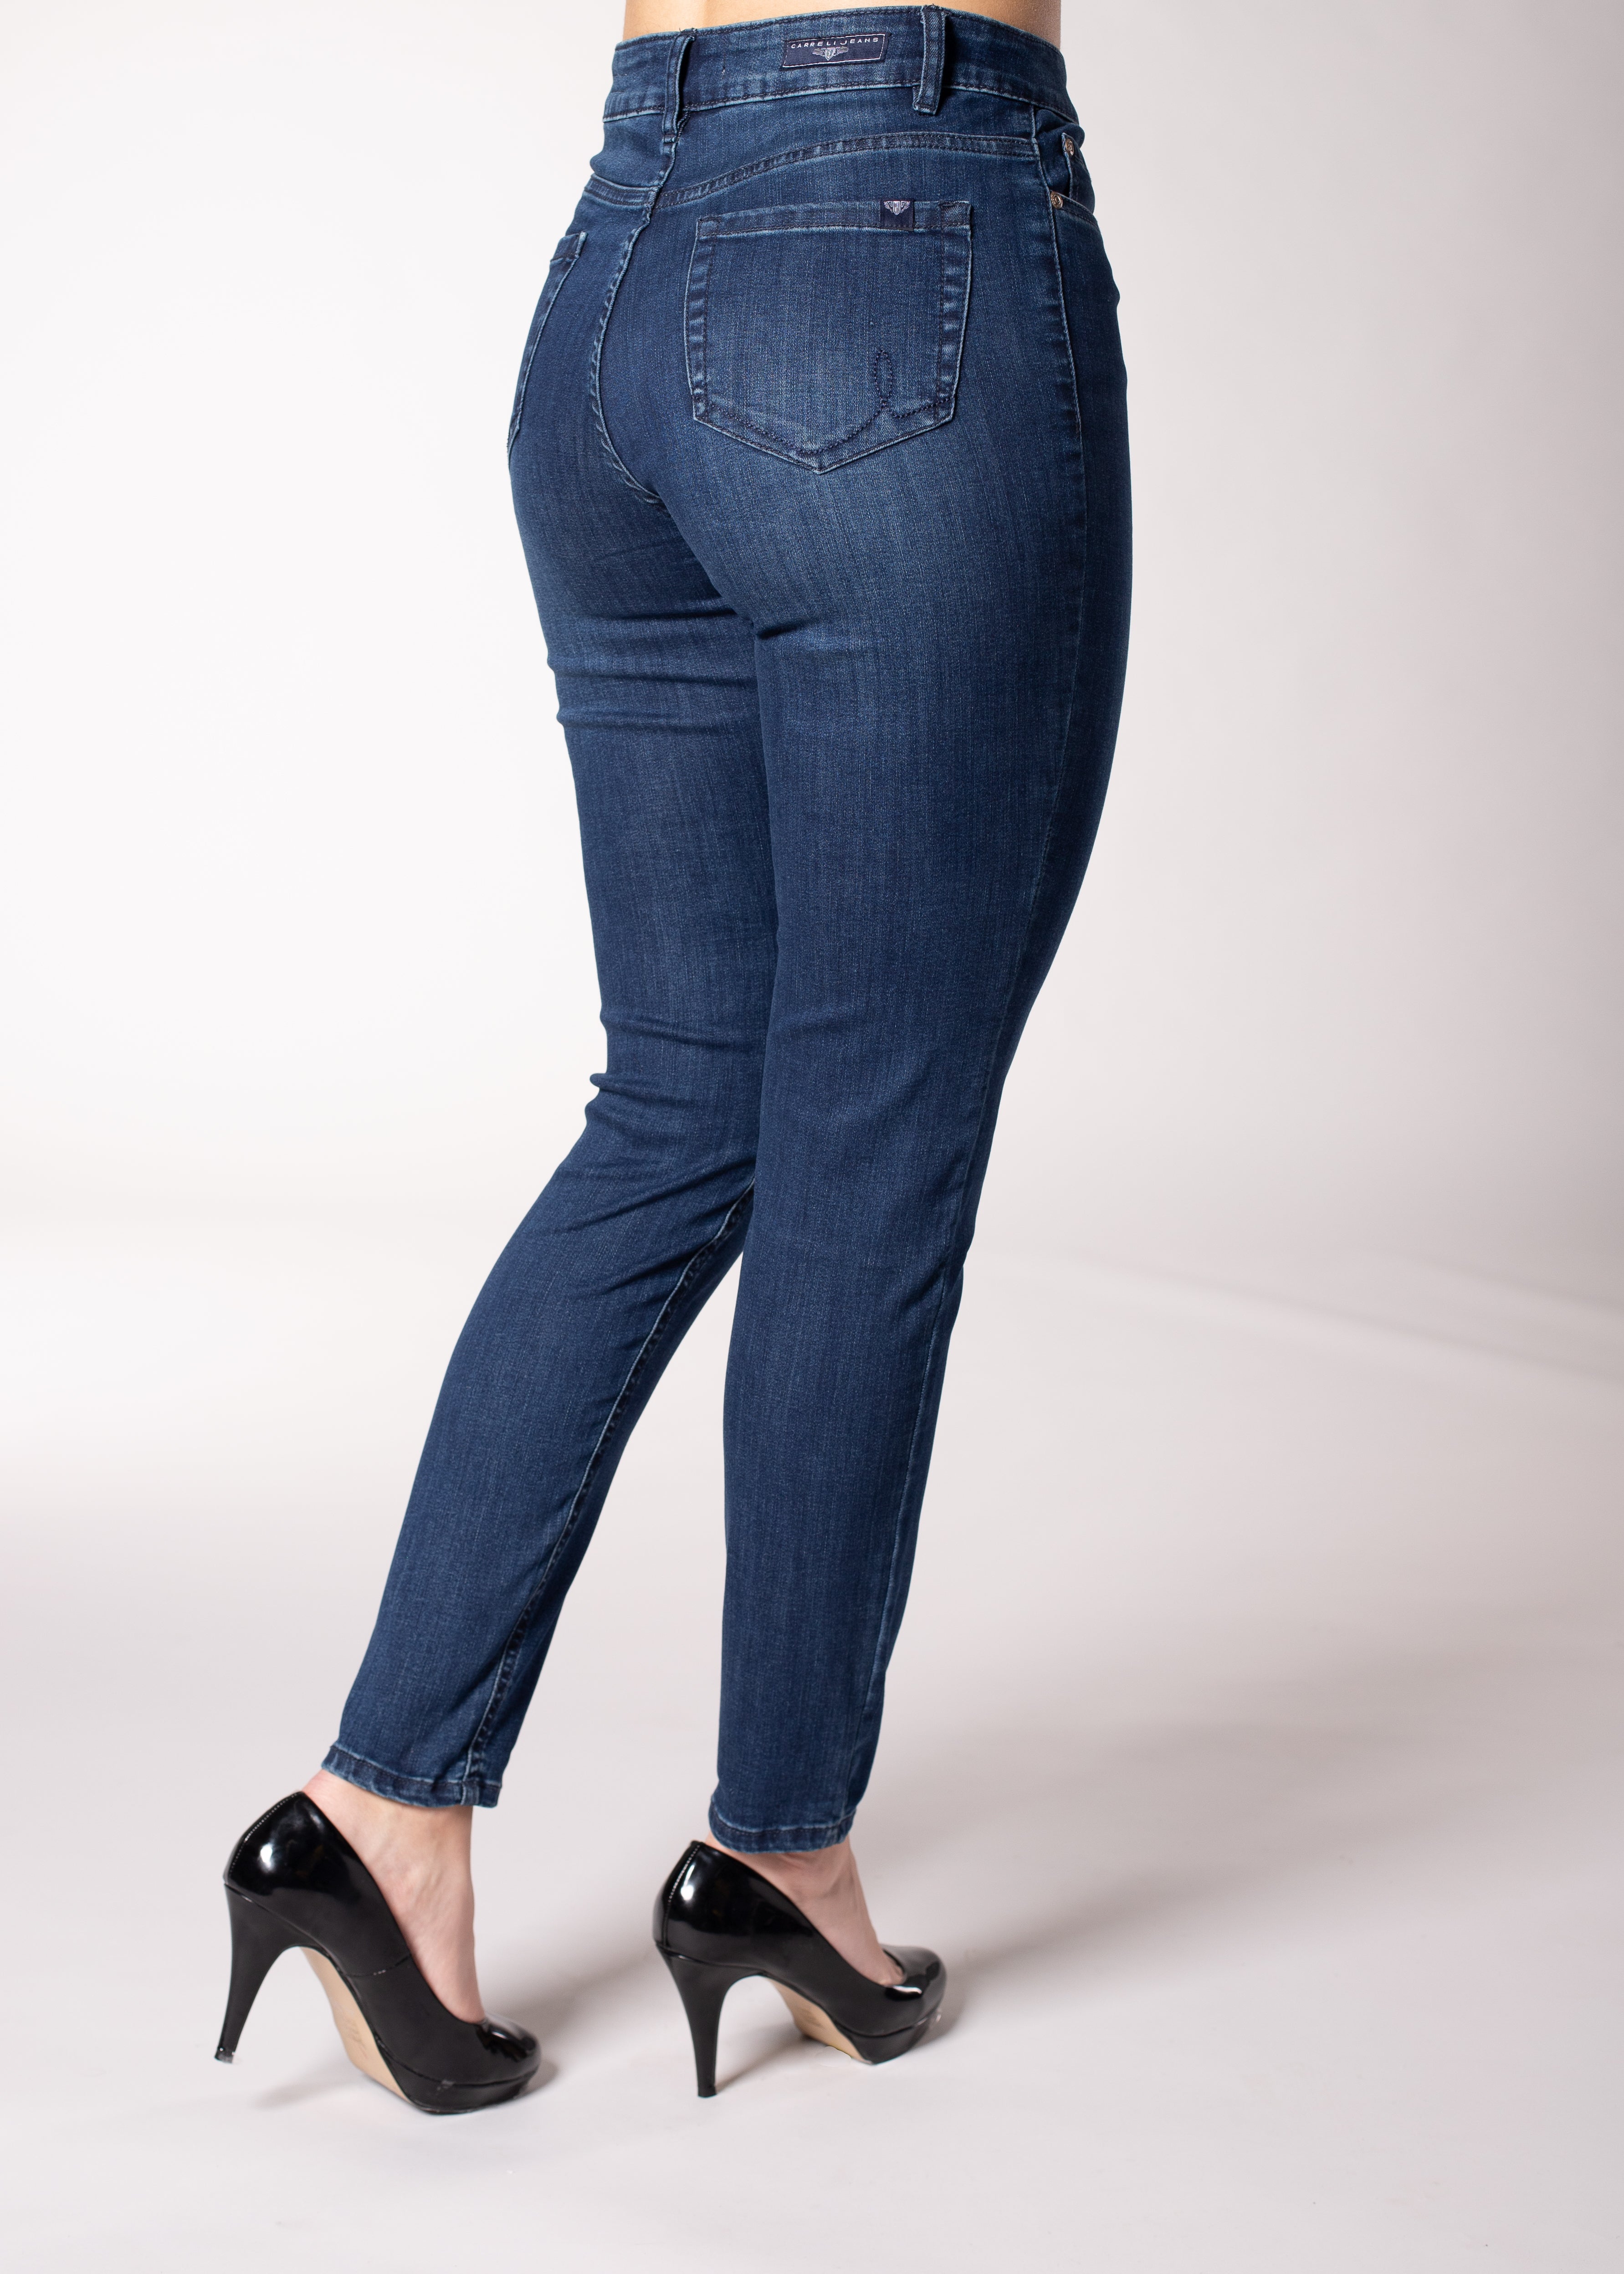 Carreli Jeans® | Angela Fit Skinny Leg in Blue Black Wash